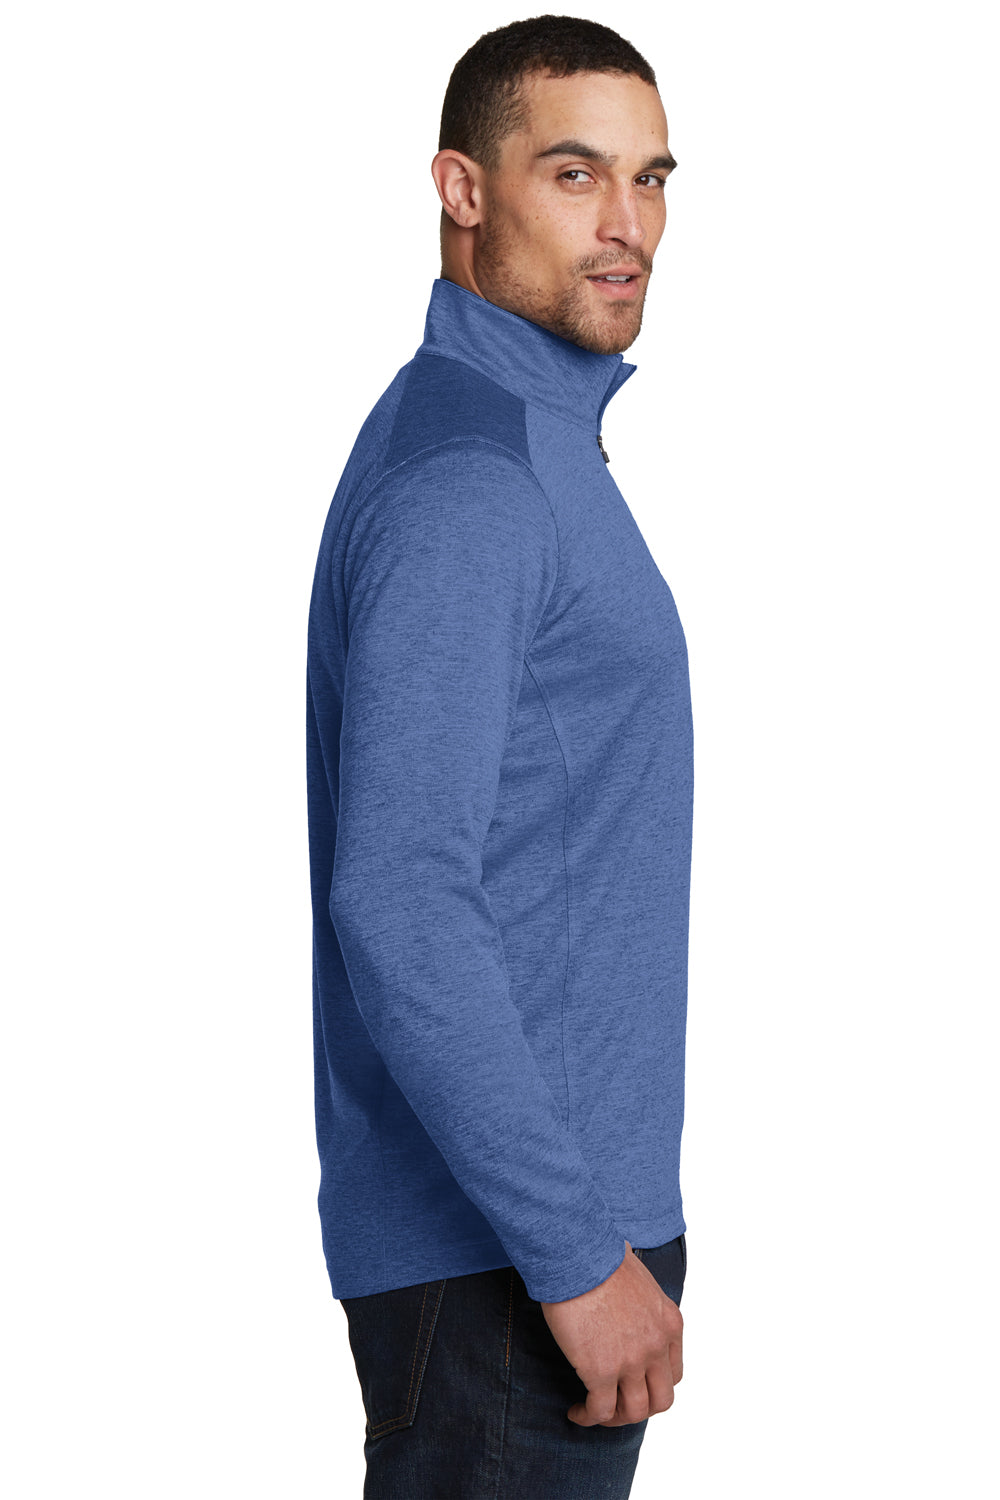 Ogio OG202 Mens Pixel Moisture Wicking 1/4 Zip Sweatshirt Blue Side